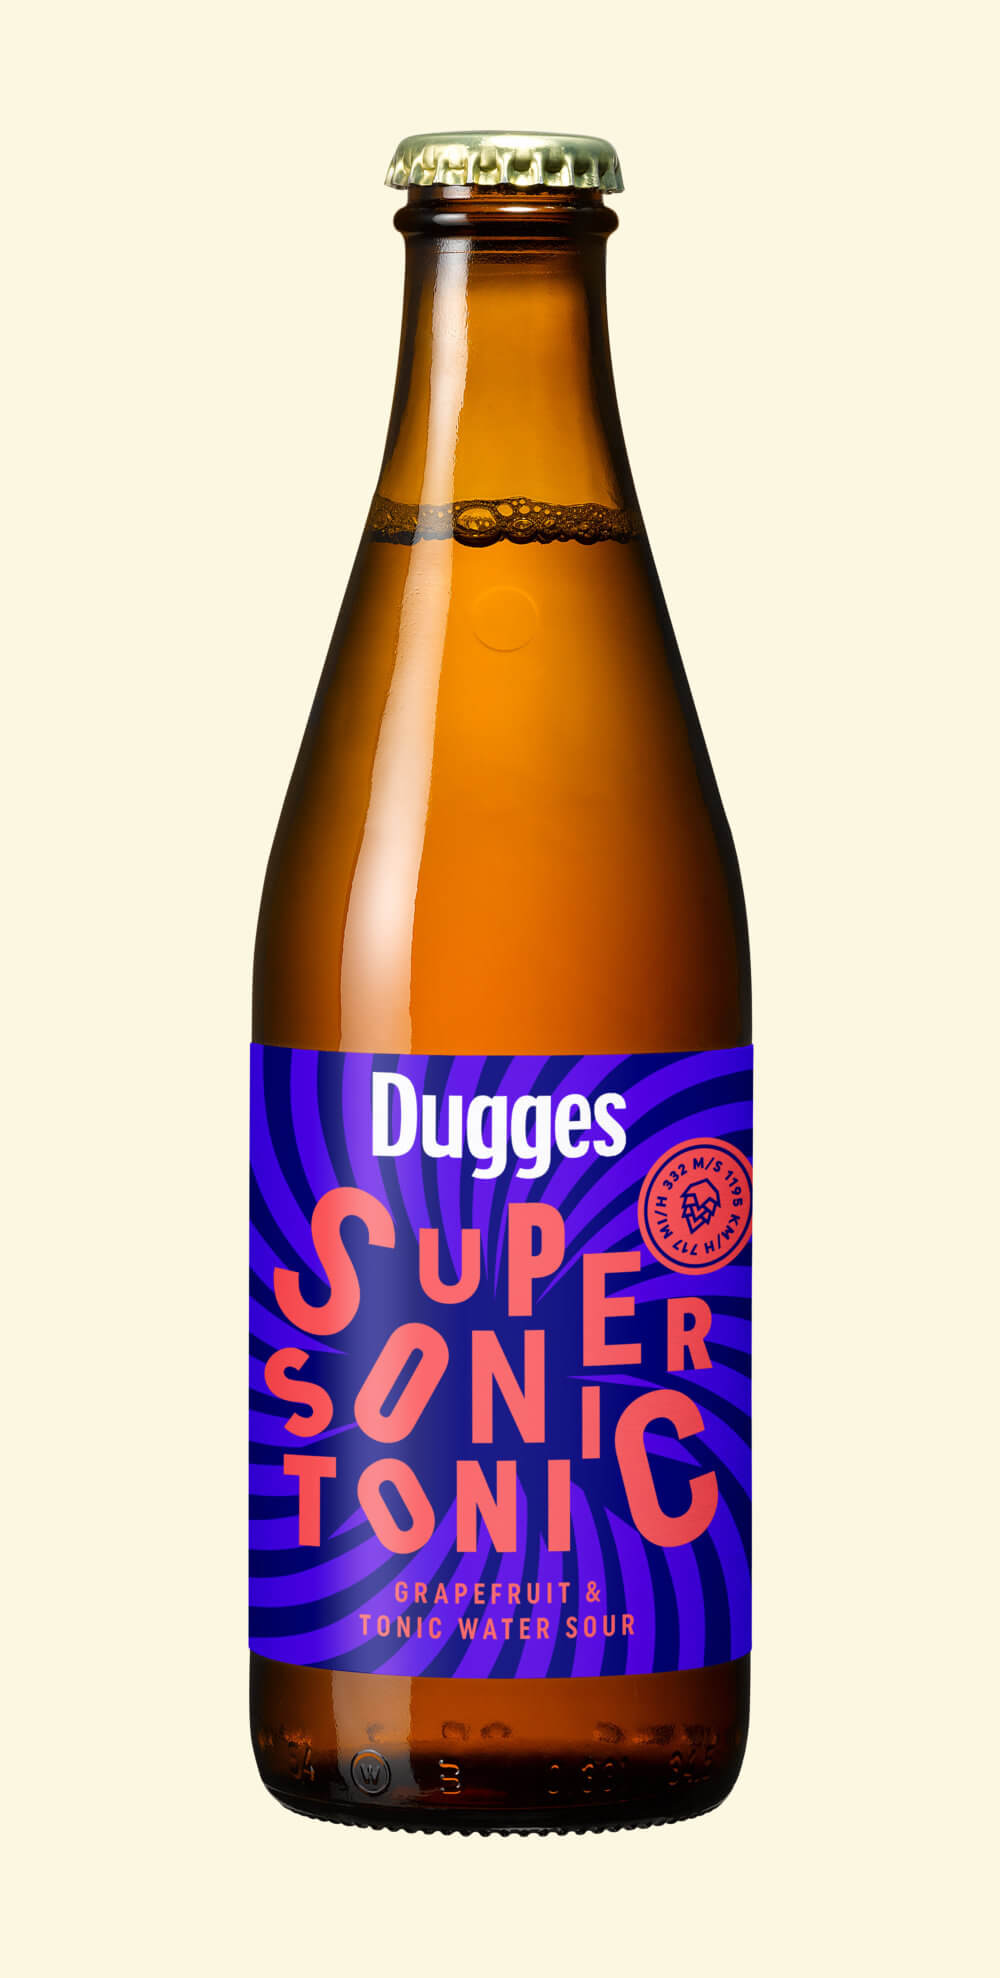 Supersonic Tonic - Dugges Bryggeri - Grapefruit & Tonic Water Sour, 4%, 330ml Bottle